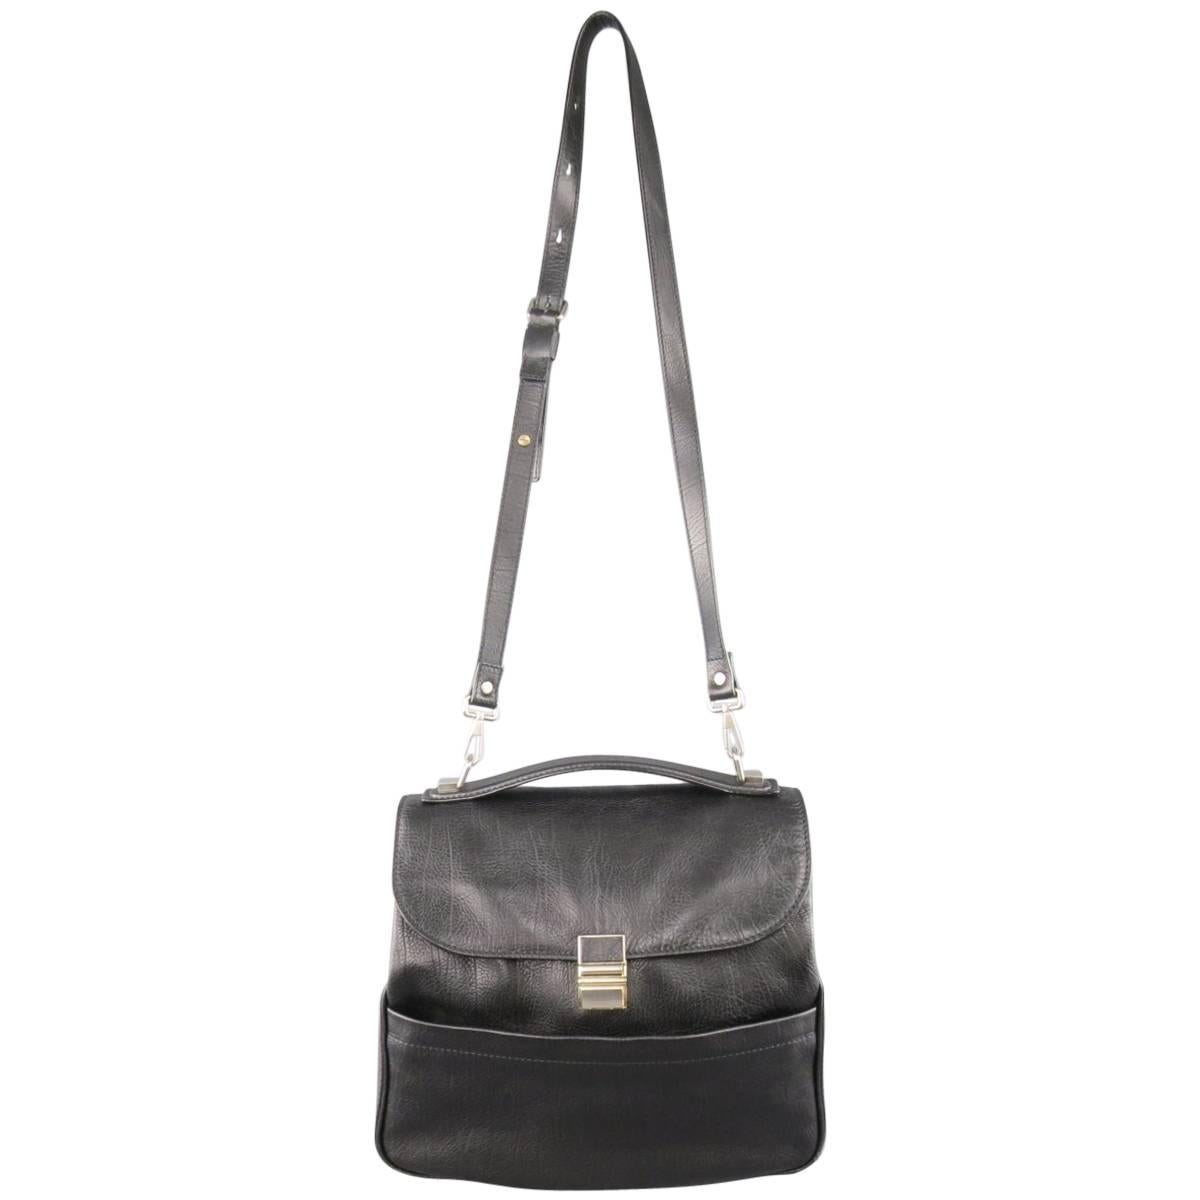 PROENZA SCHOULER Black Leather KENT Handbag